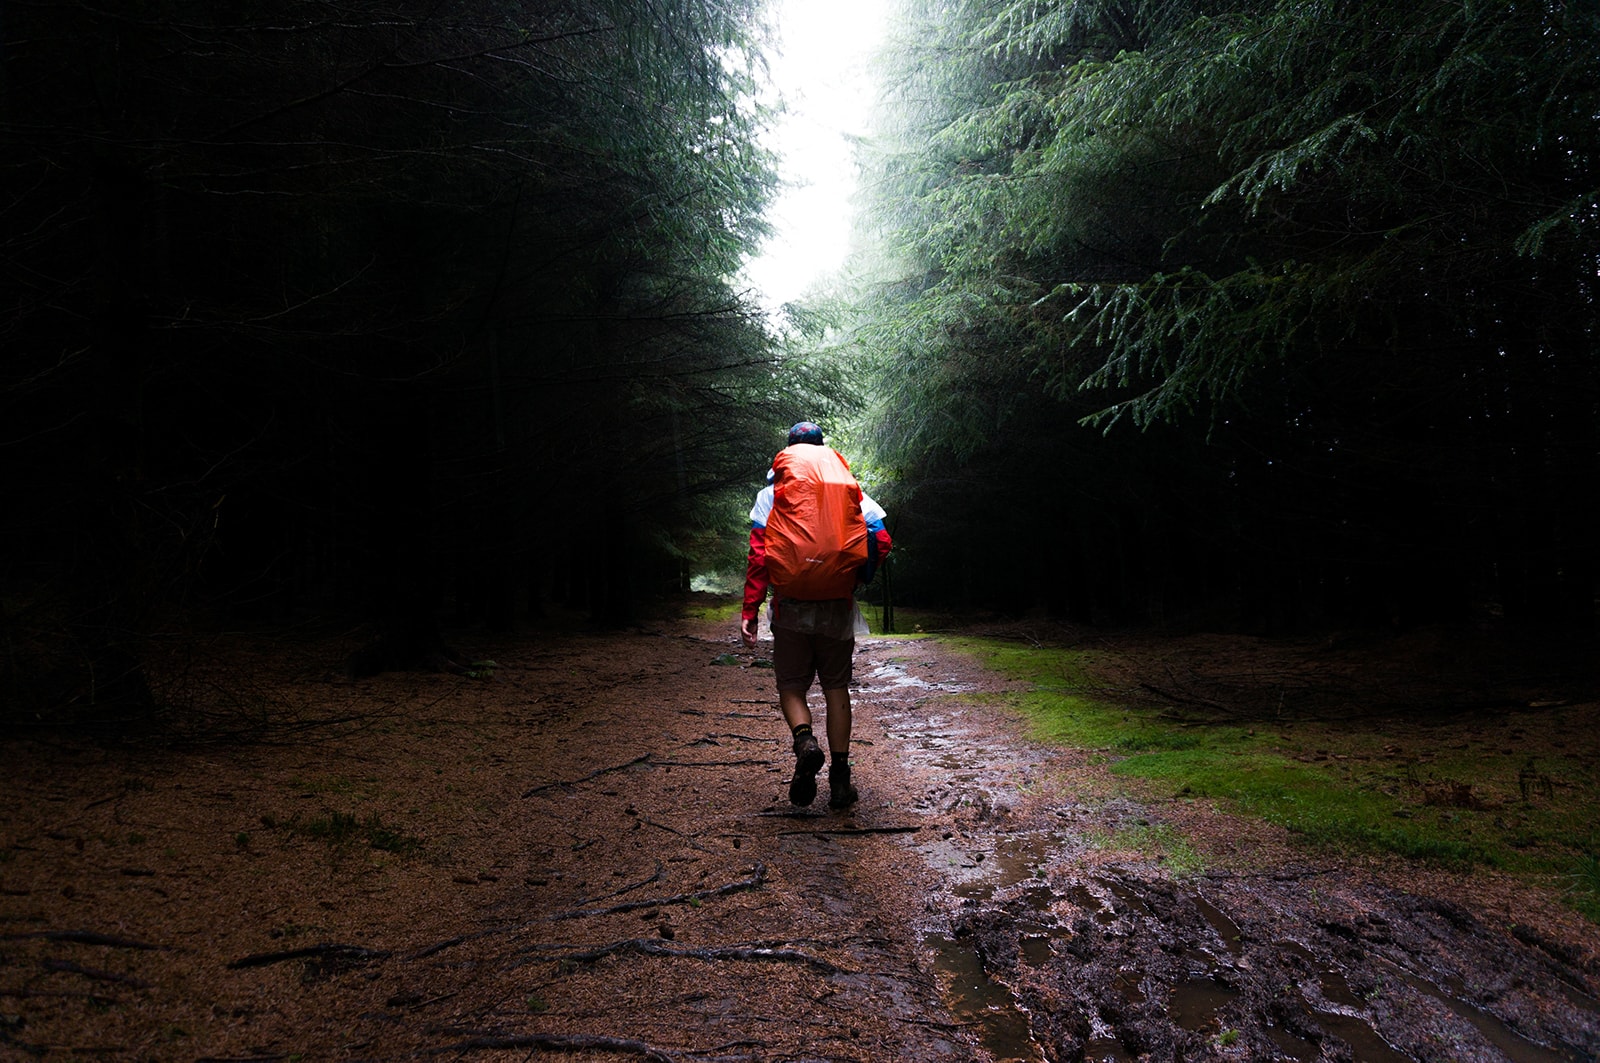 a man with an orange backpack walking through a muddy trail